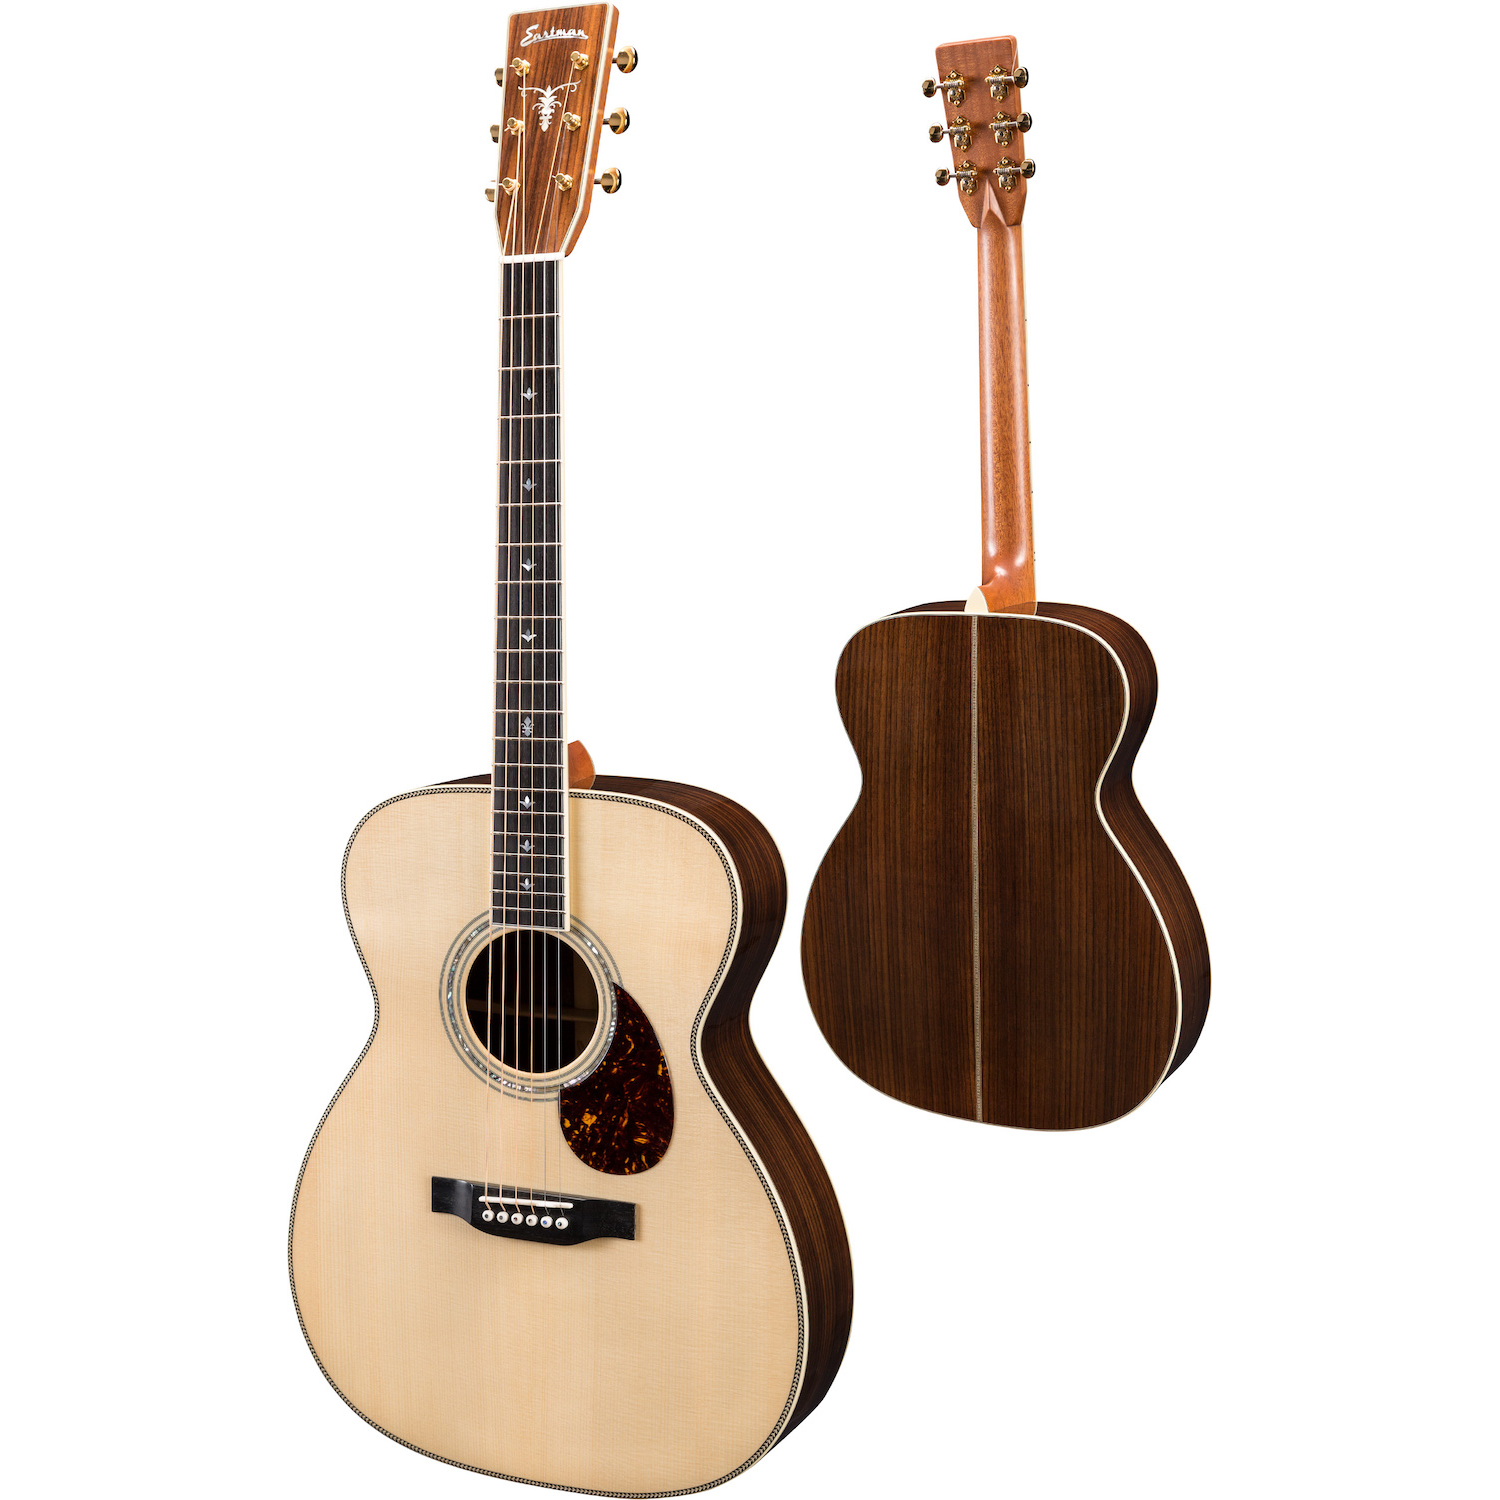 Eastman DT30 OM "Double Top" Ochestral Model Guitar